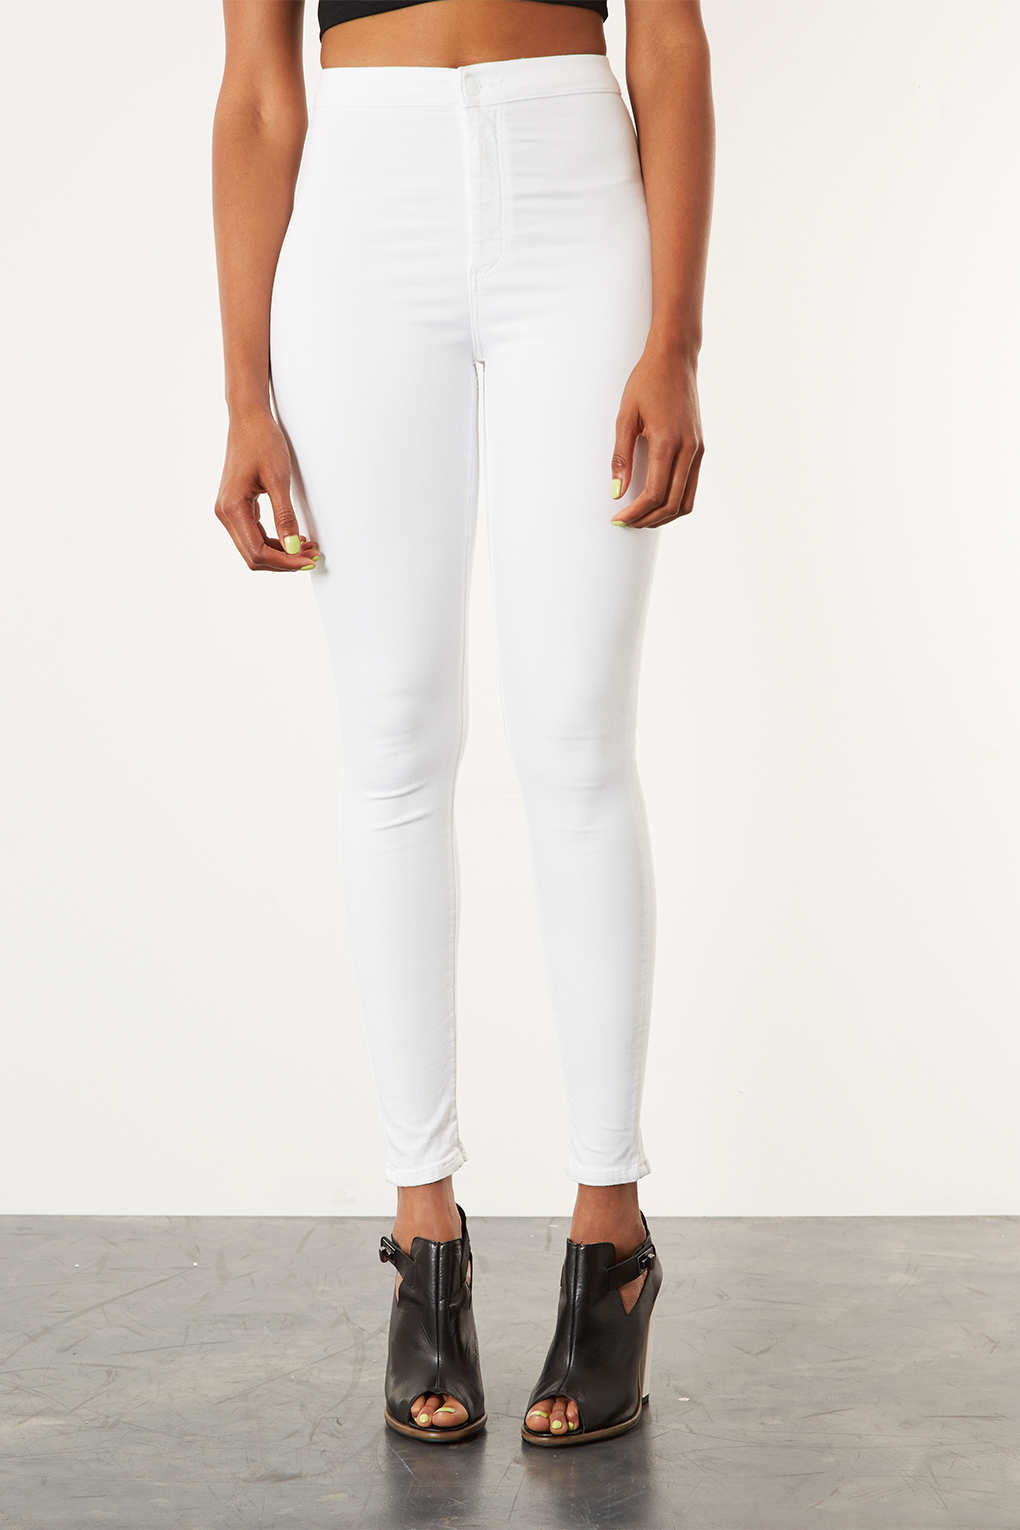 Lyst Petite Moto White Joni Jeans in White